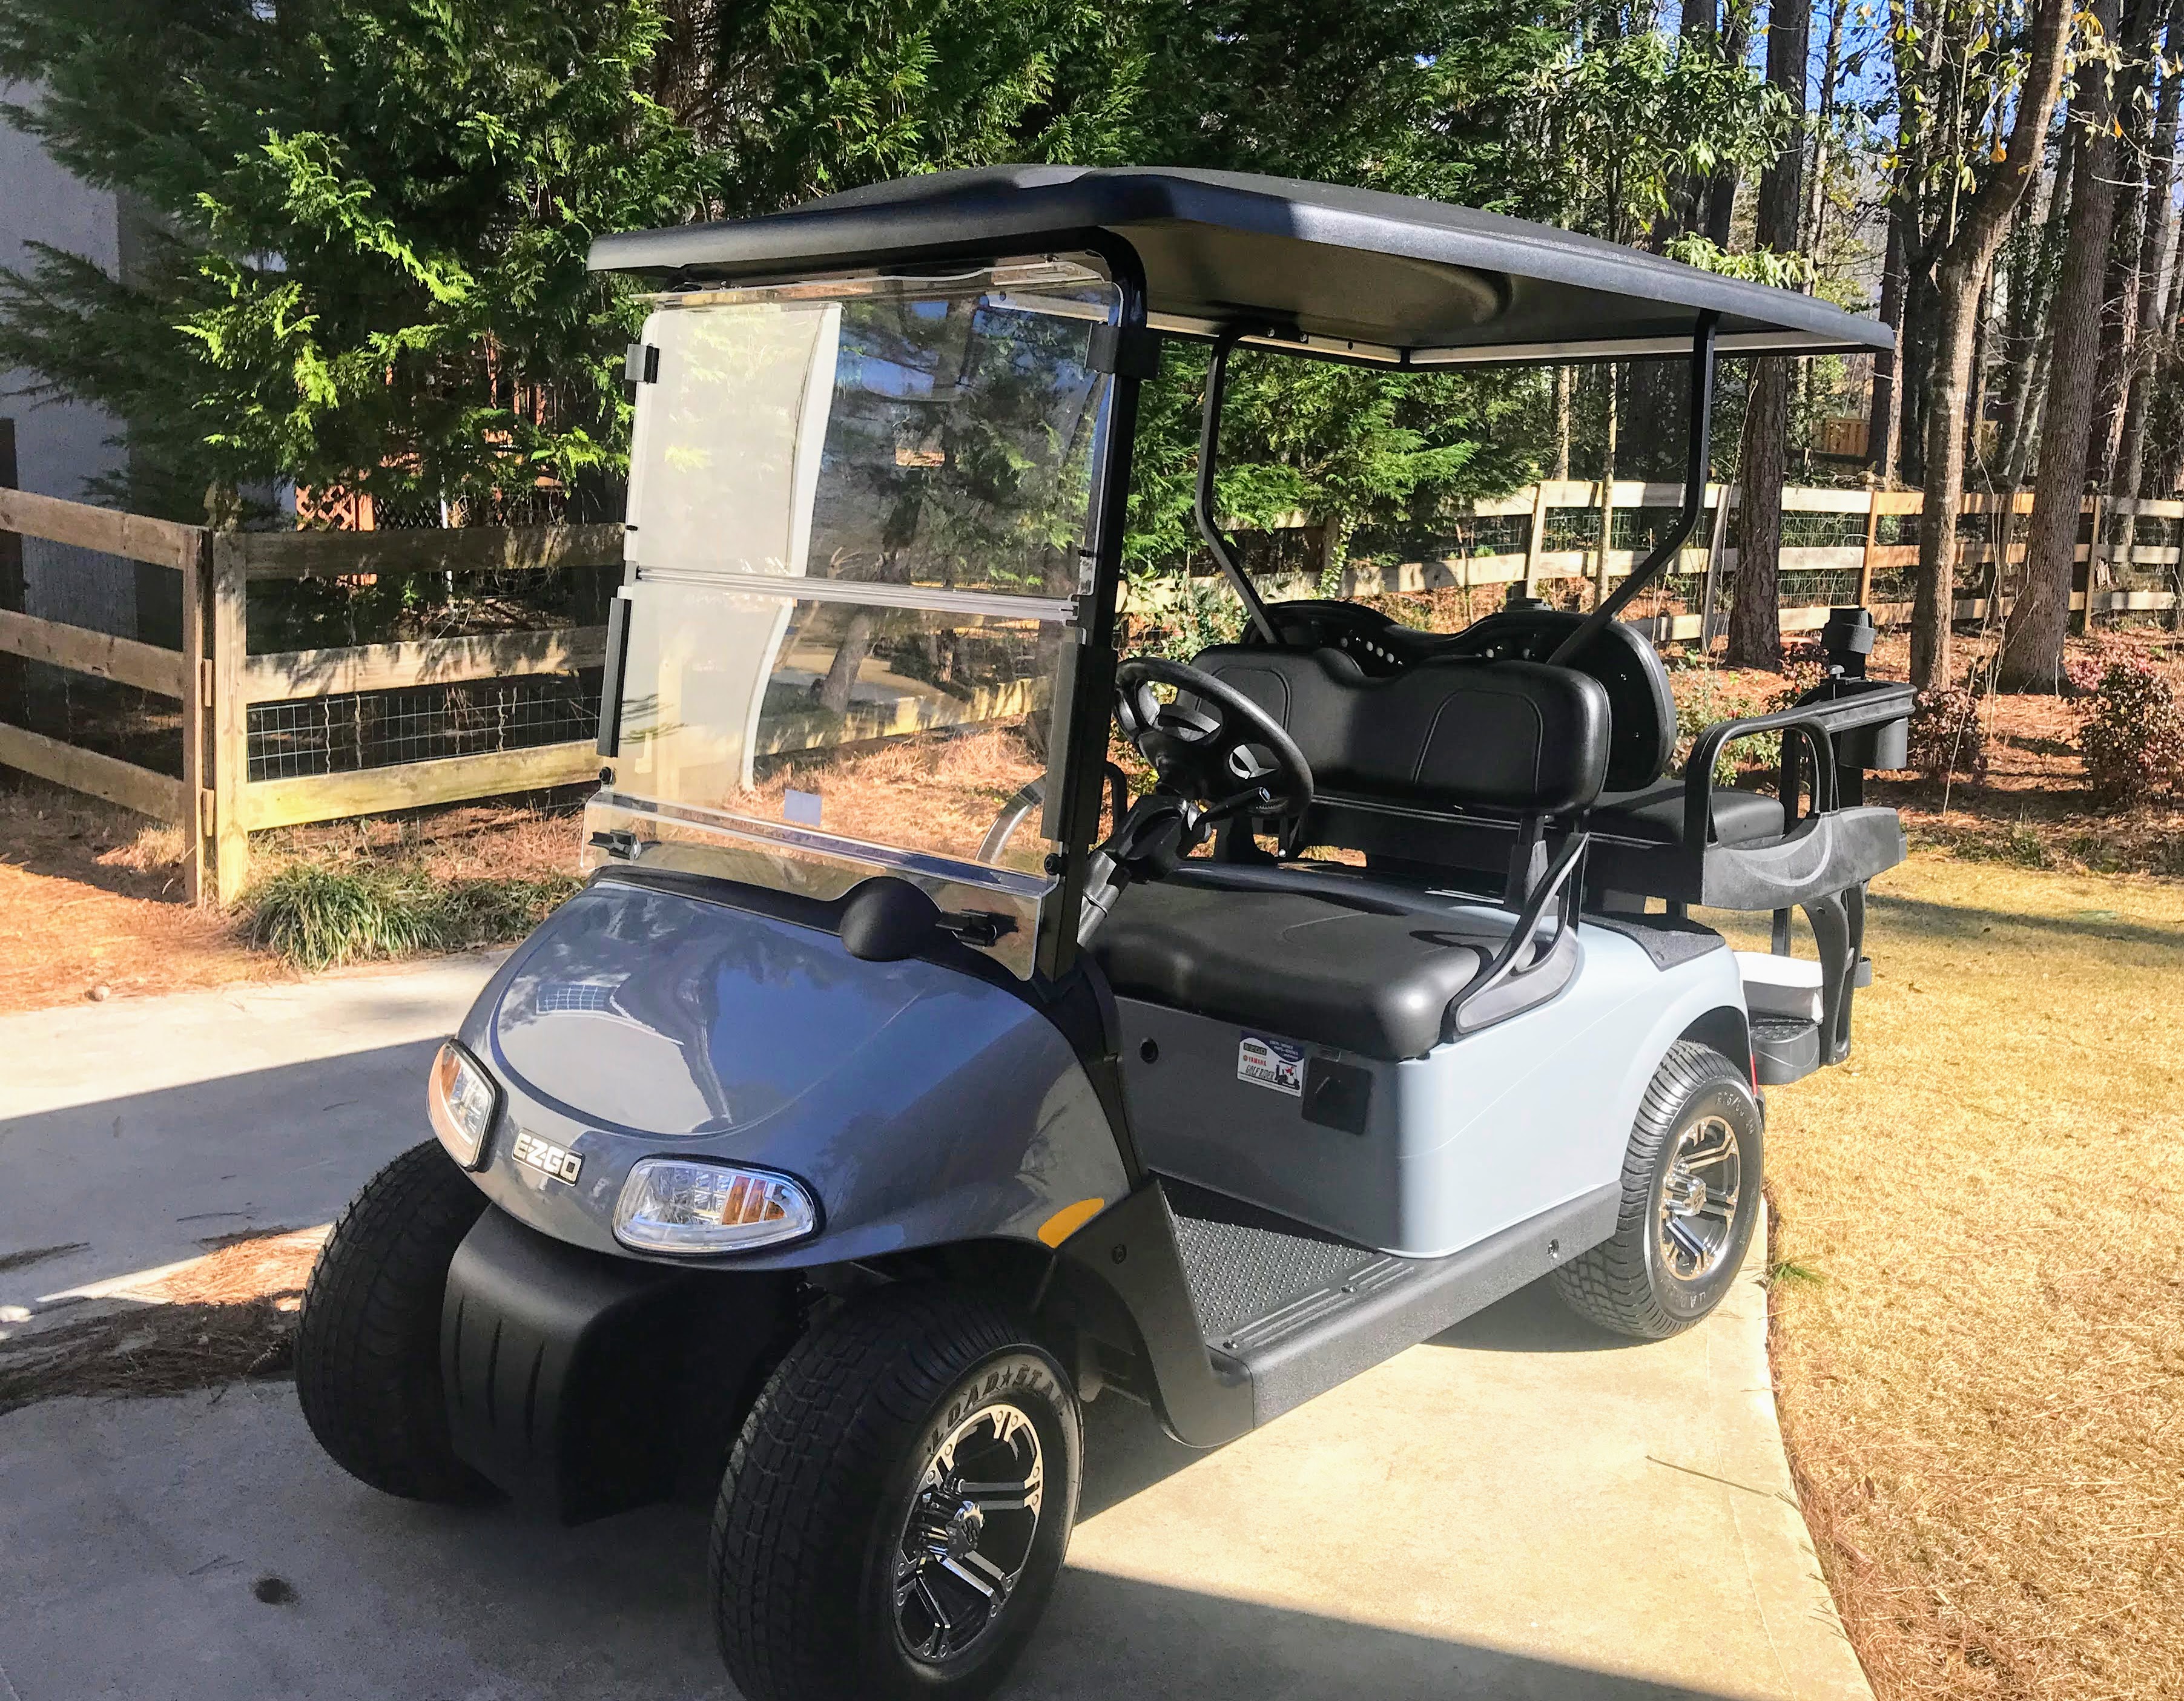 EZ Go Electric Golf Cart - EZGO Golf Cart Models and Features